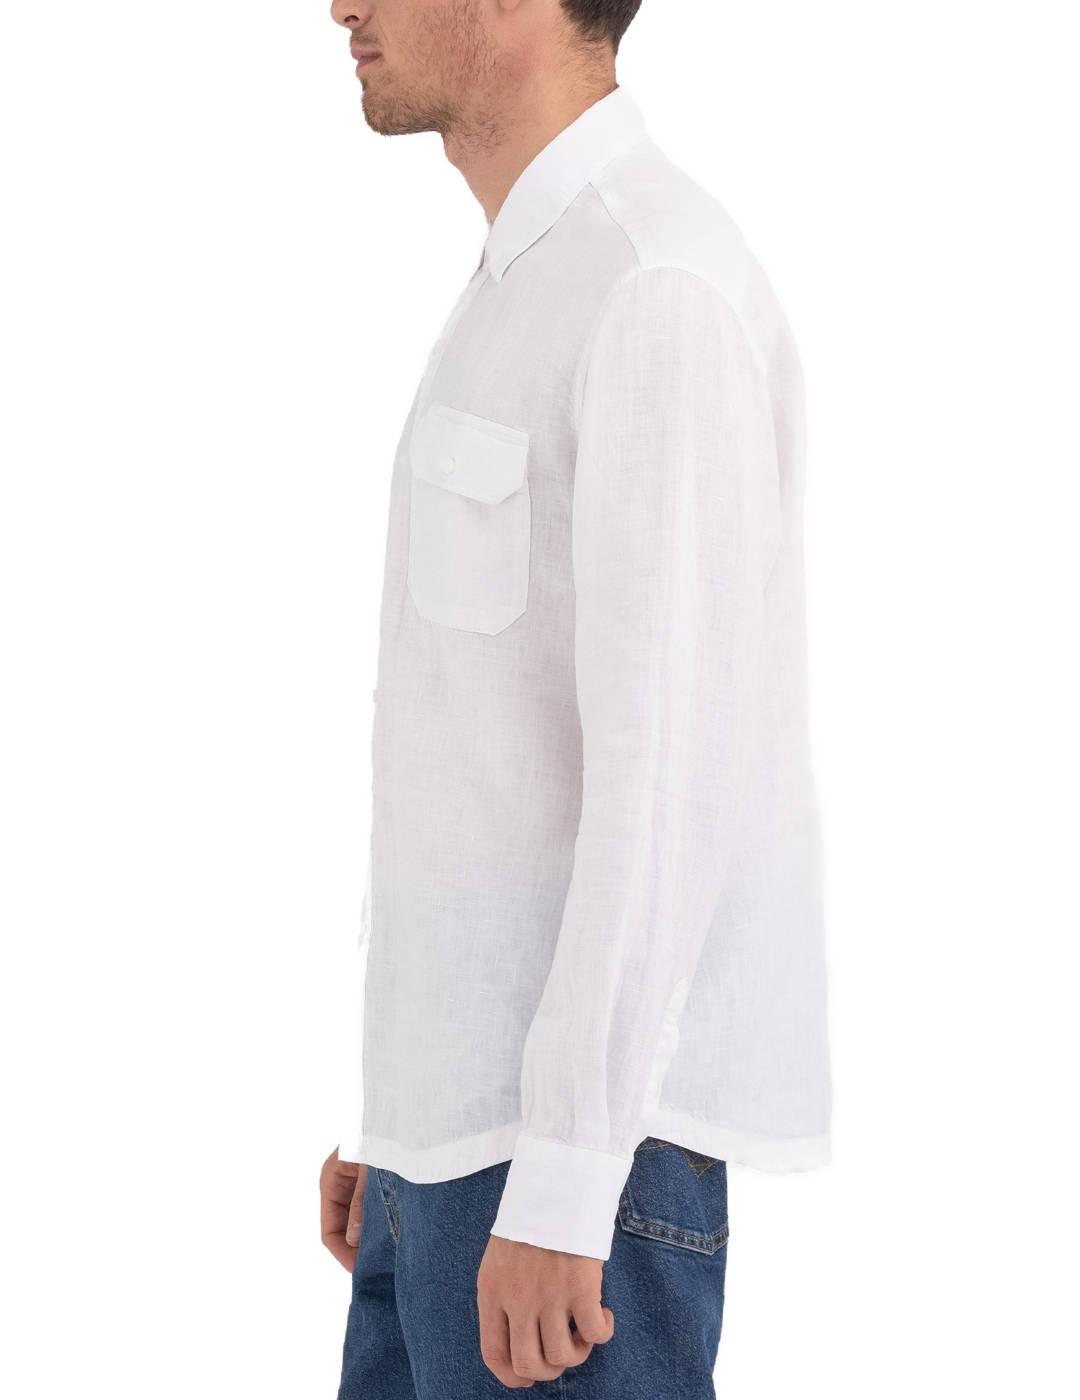 Camisa Replay blanca de lino Regular fit para hombre